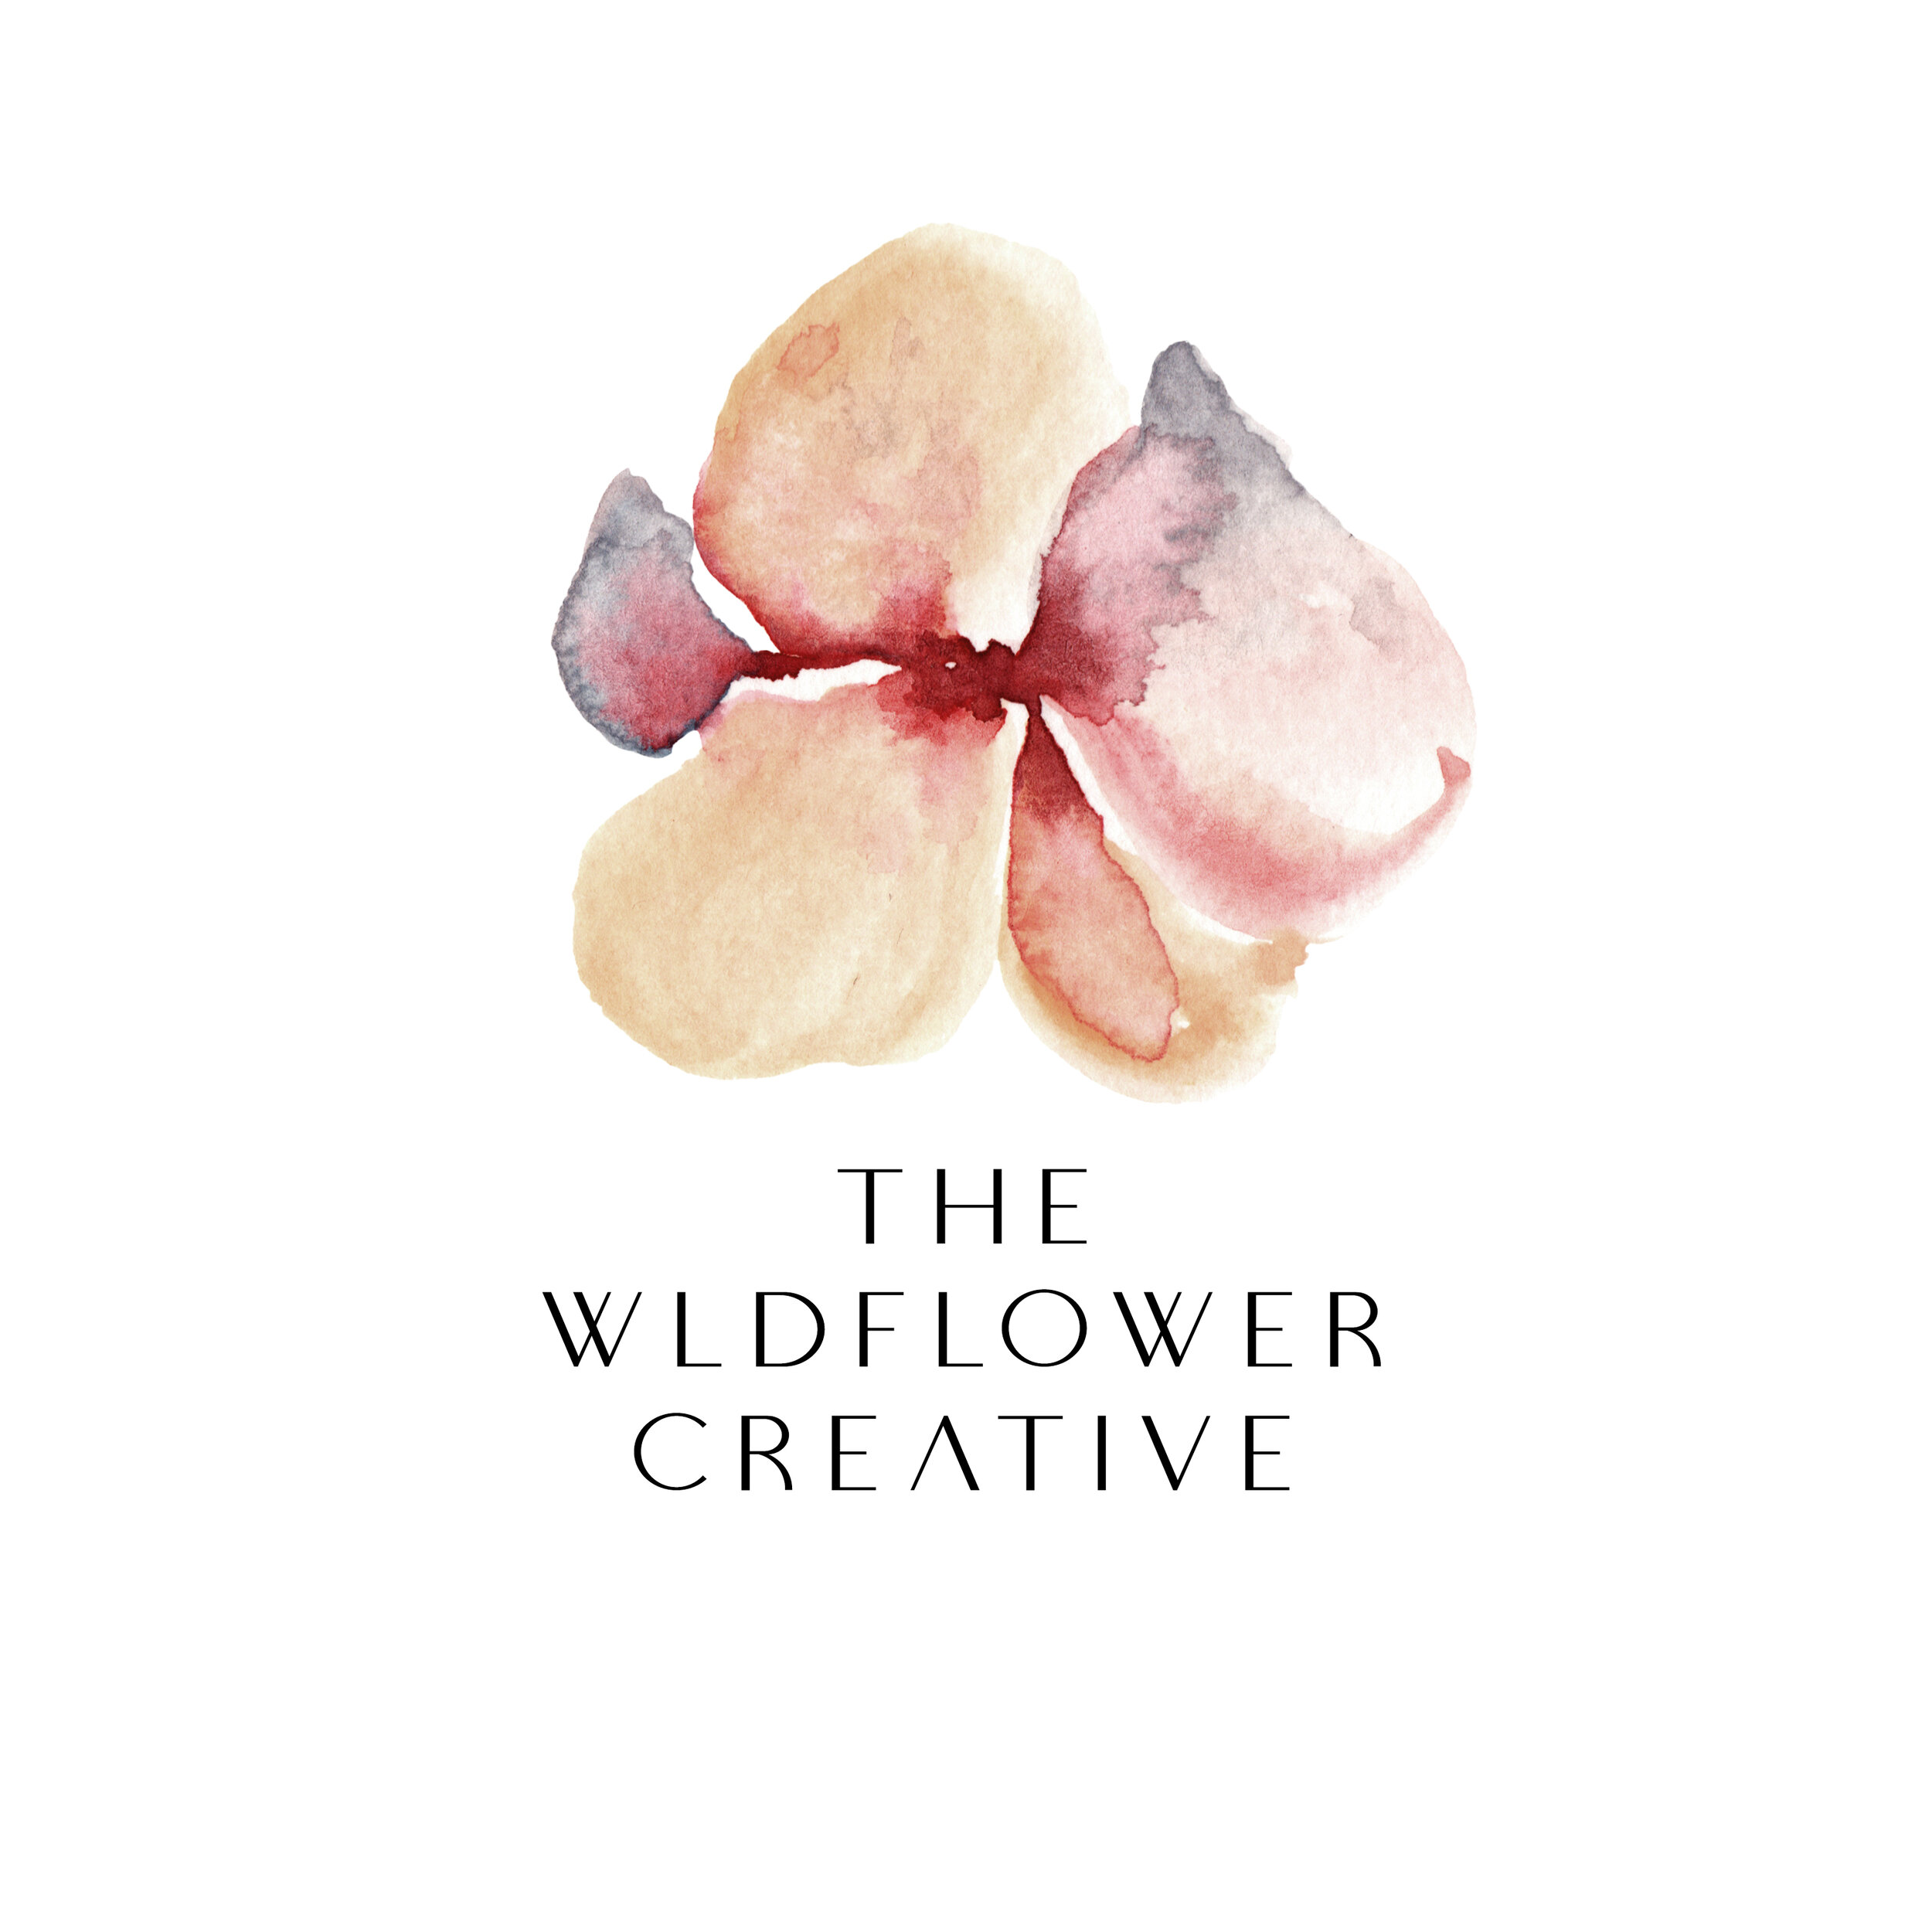 The Wldflower Creative